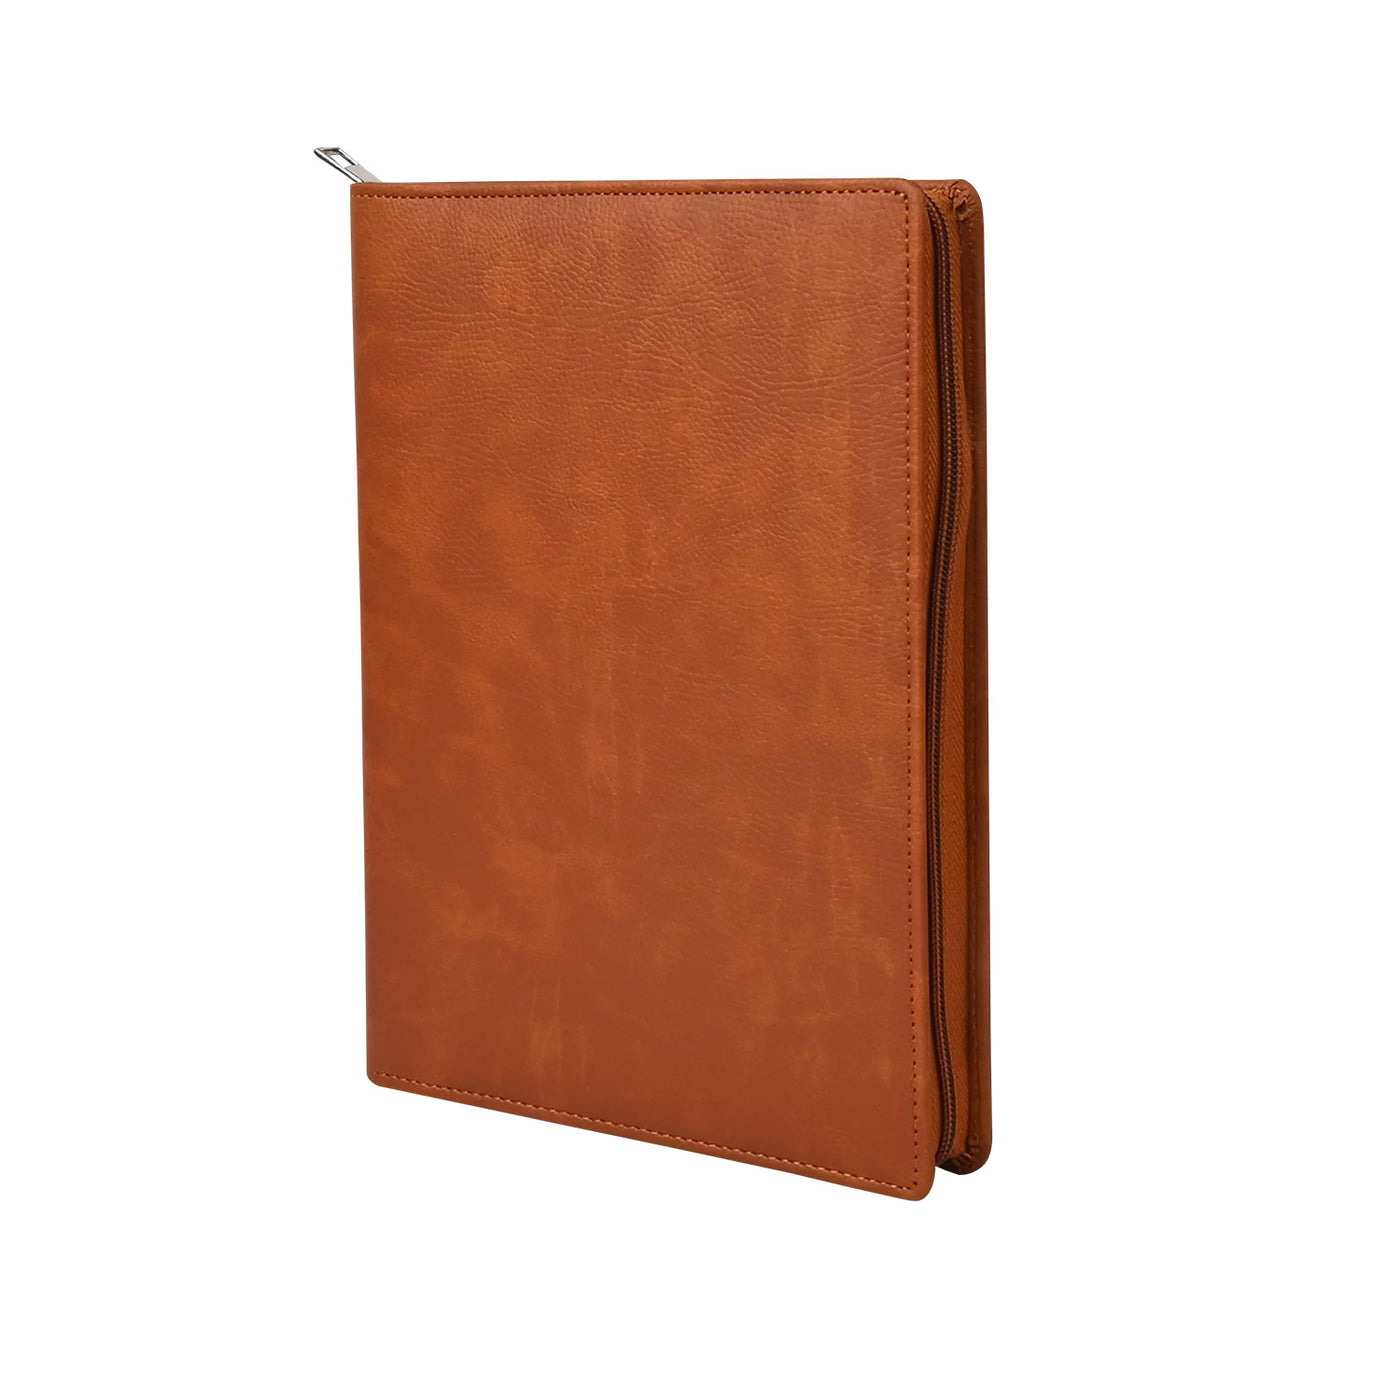 Scholar Vivant Folder Tan Notebook - A5 Ruled 2